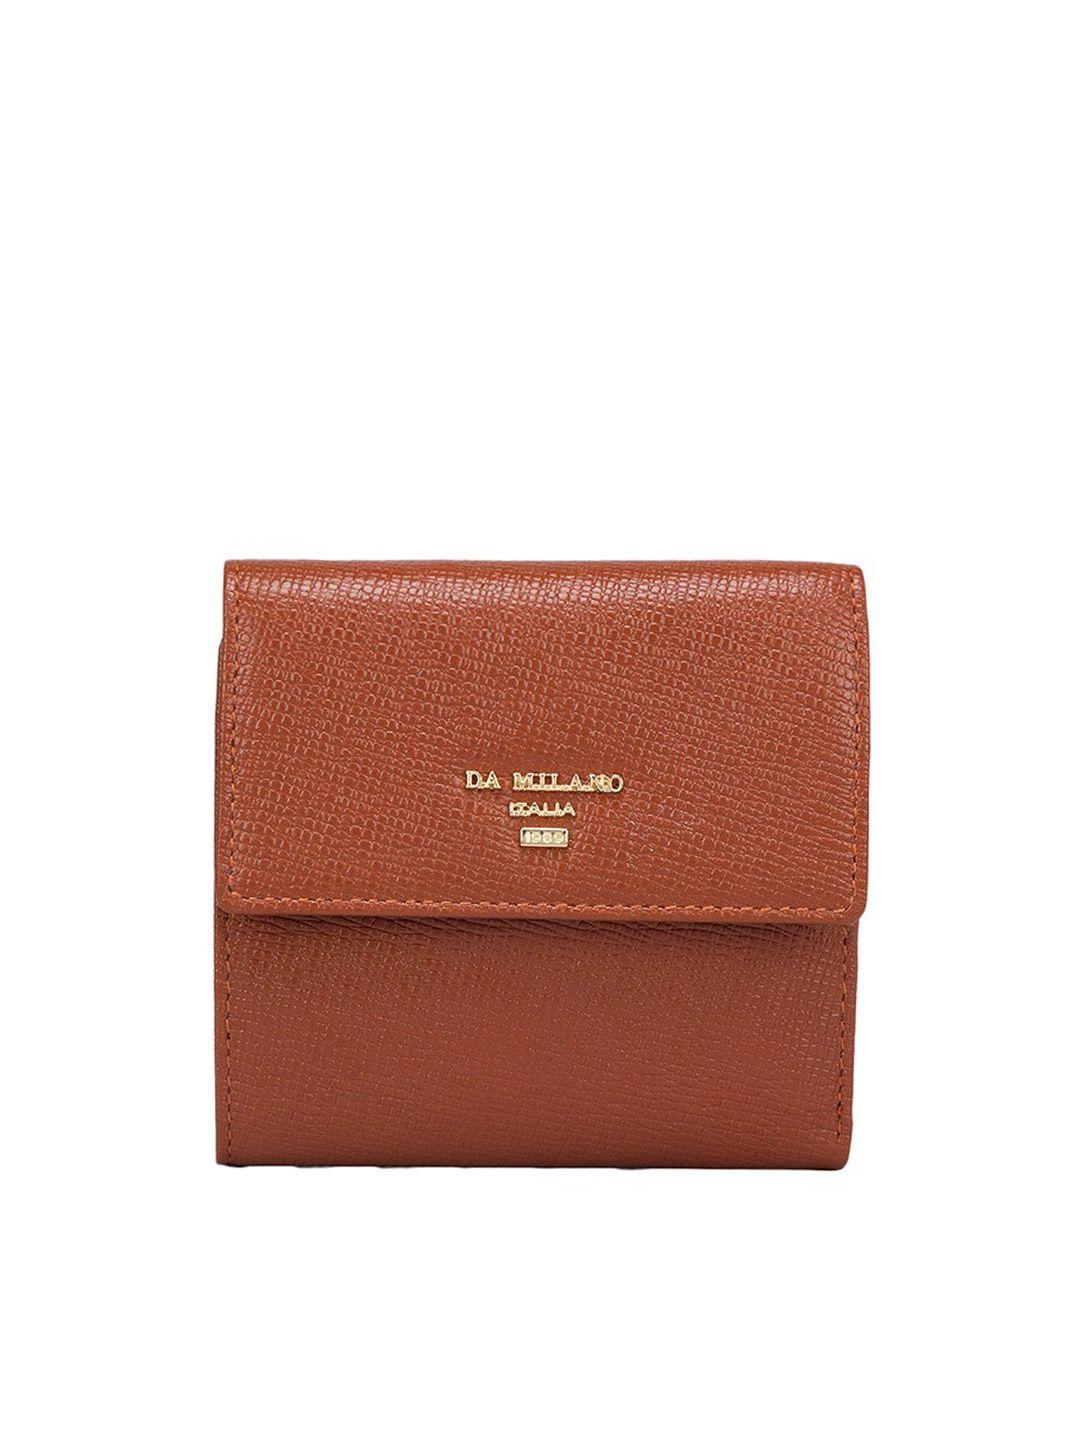 da milano textured leather three fold wallet